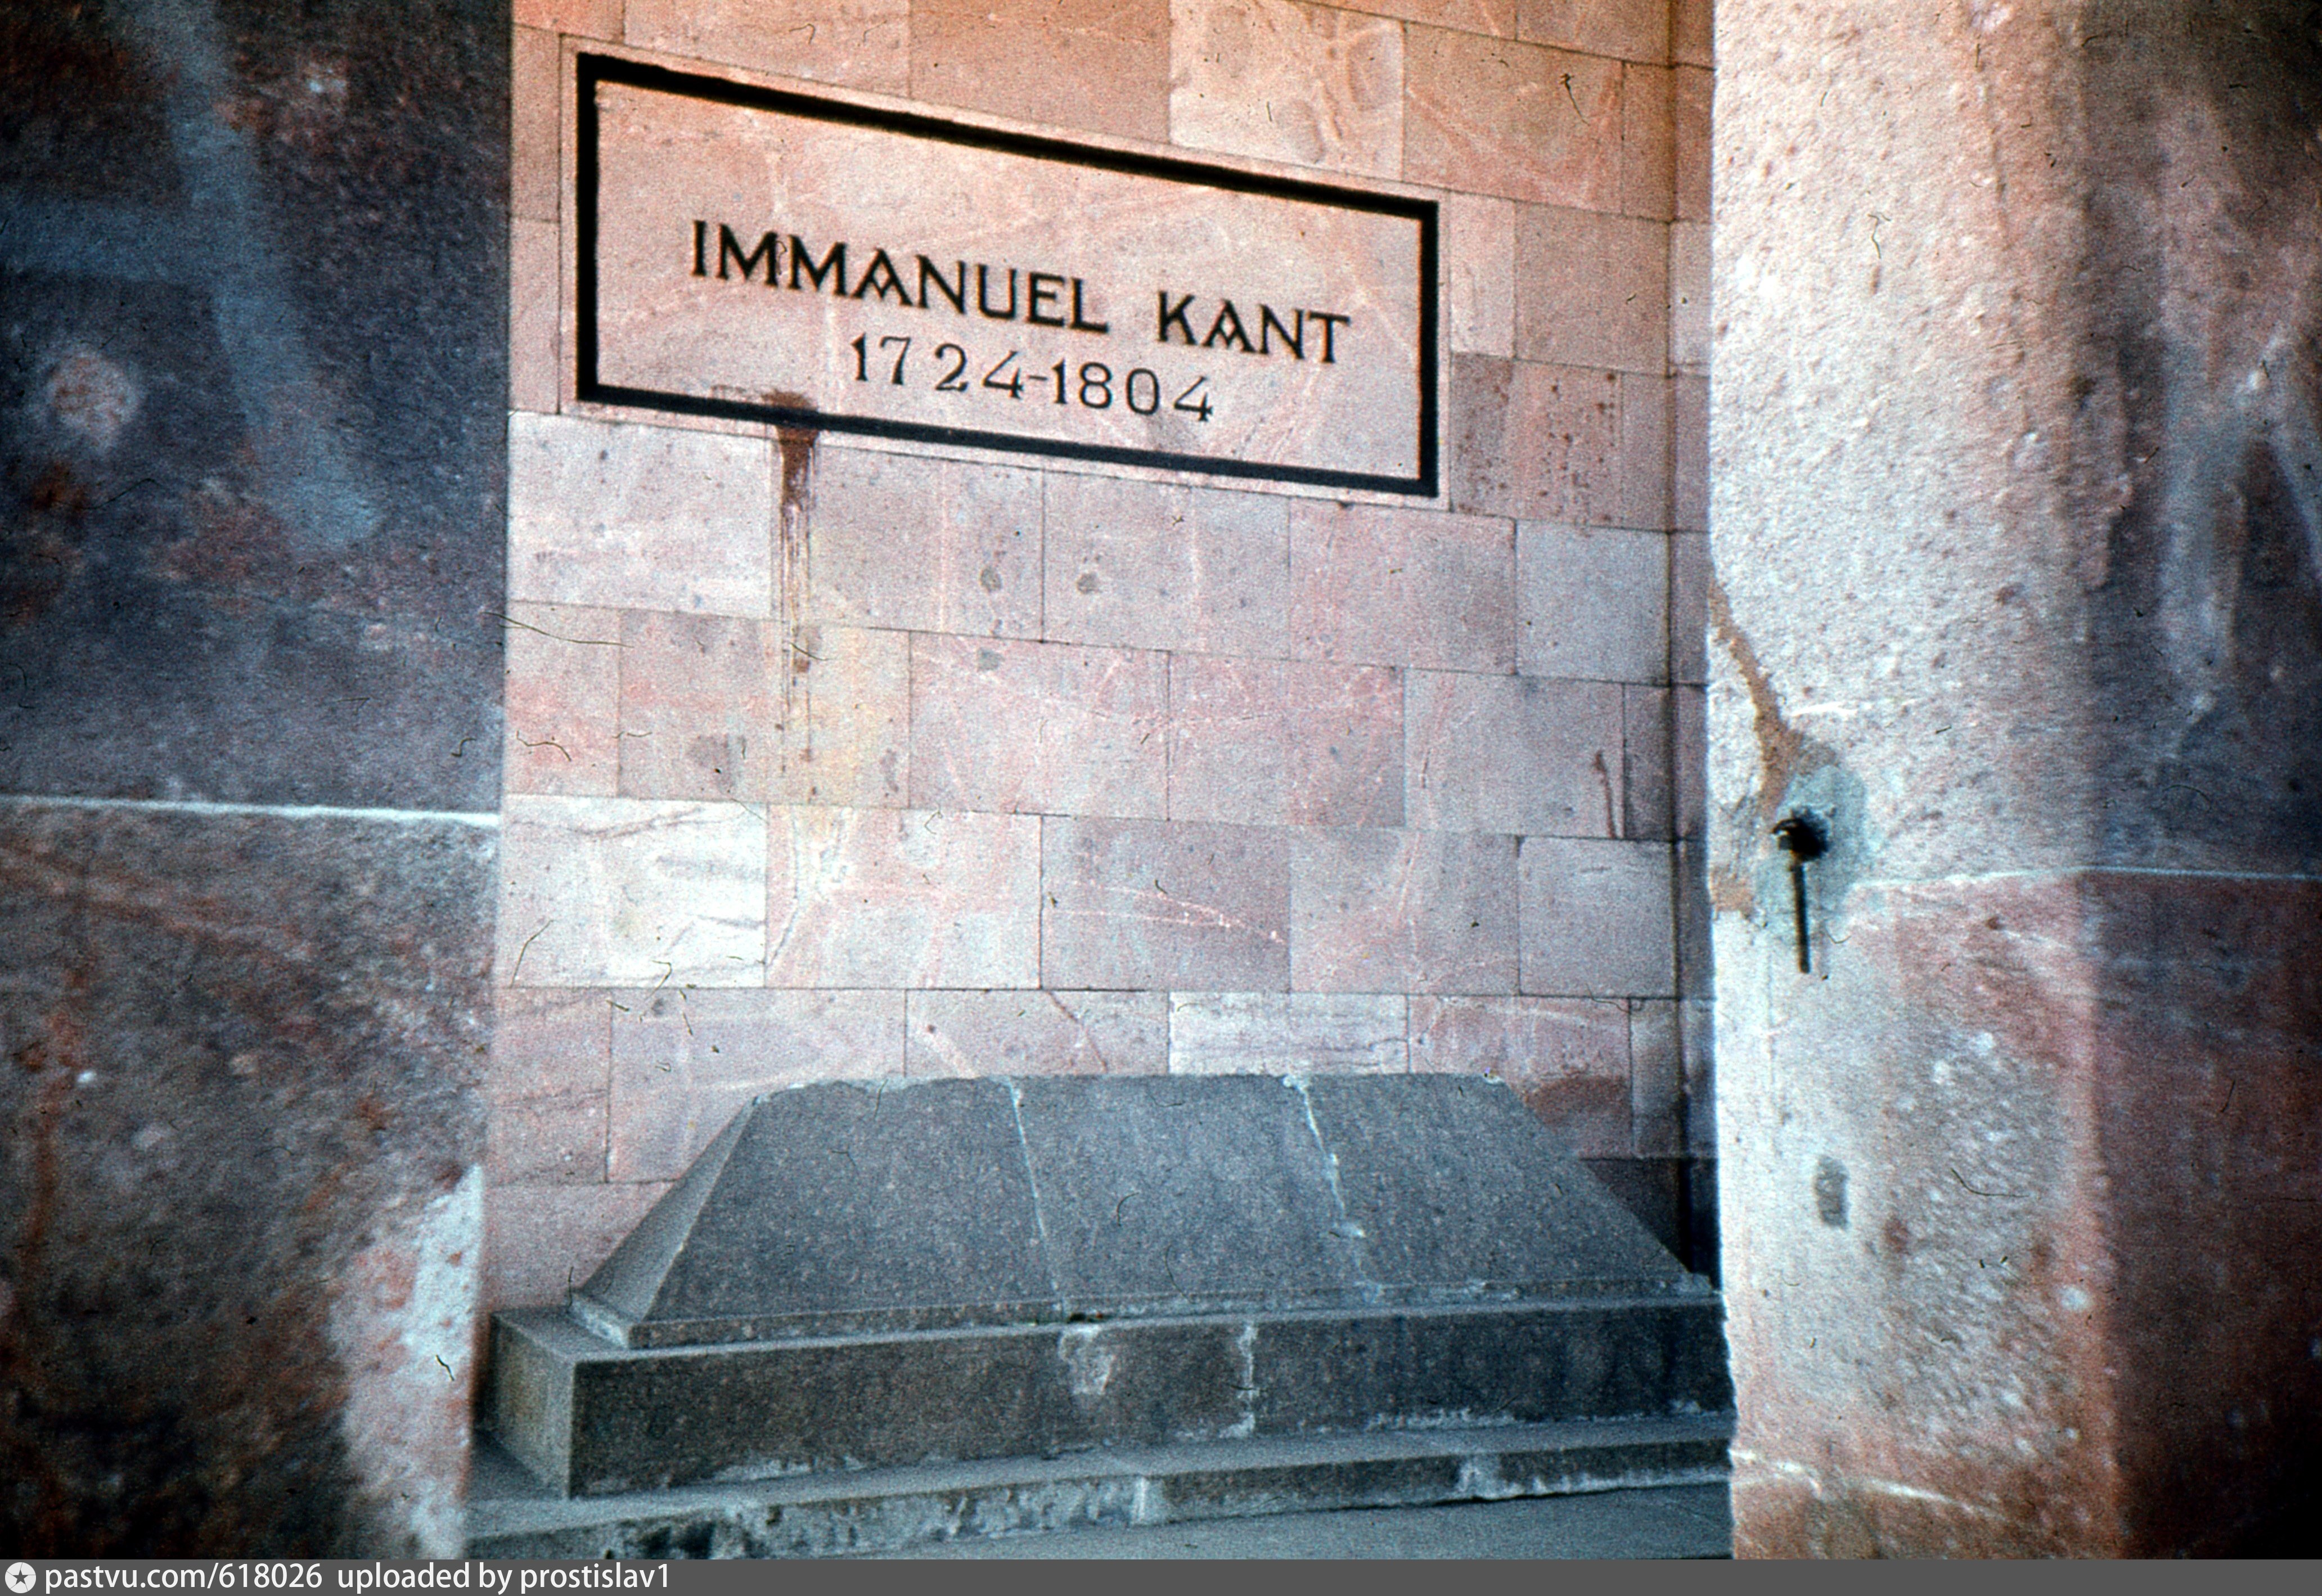 Кант похоронен. Иммануил кант могила Канта. Могила Иммануила Канта в Калининграде.